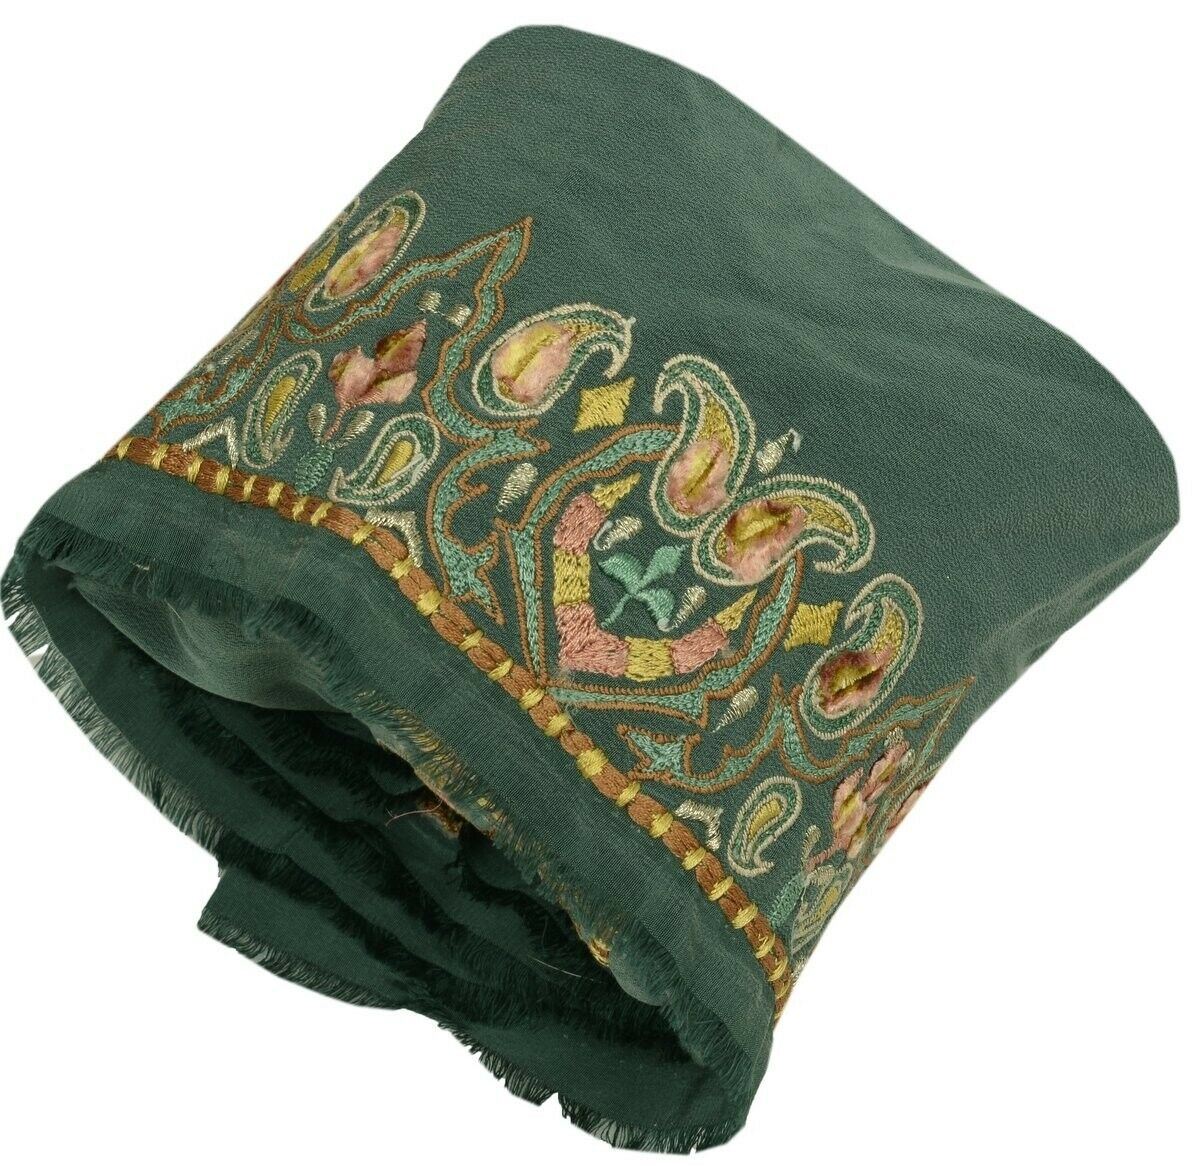 Vintage Sari Border Indian Craft Trim Embroidered Ribbon Lace Grayish Green